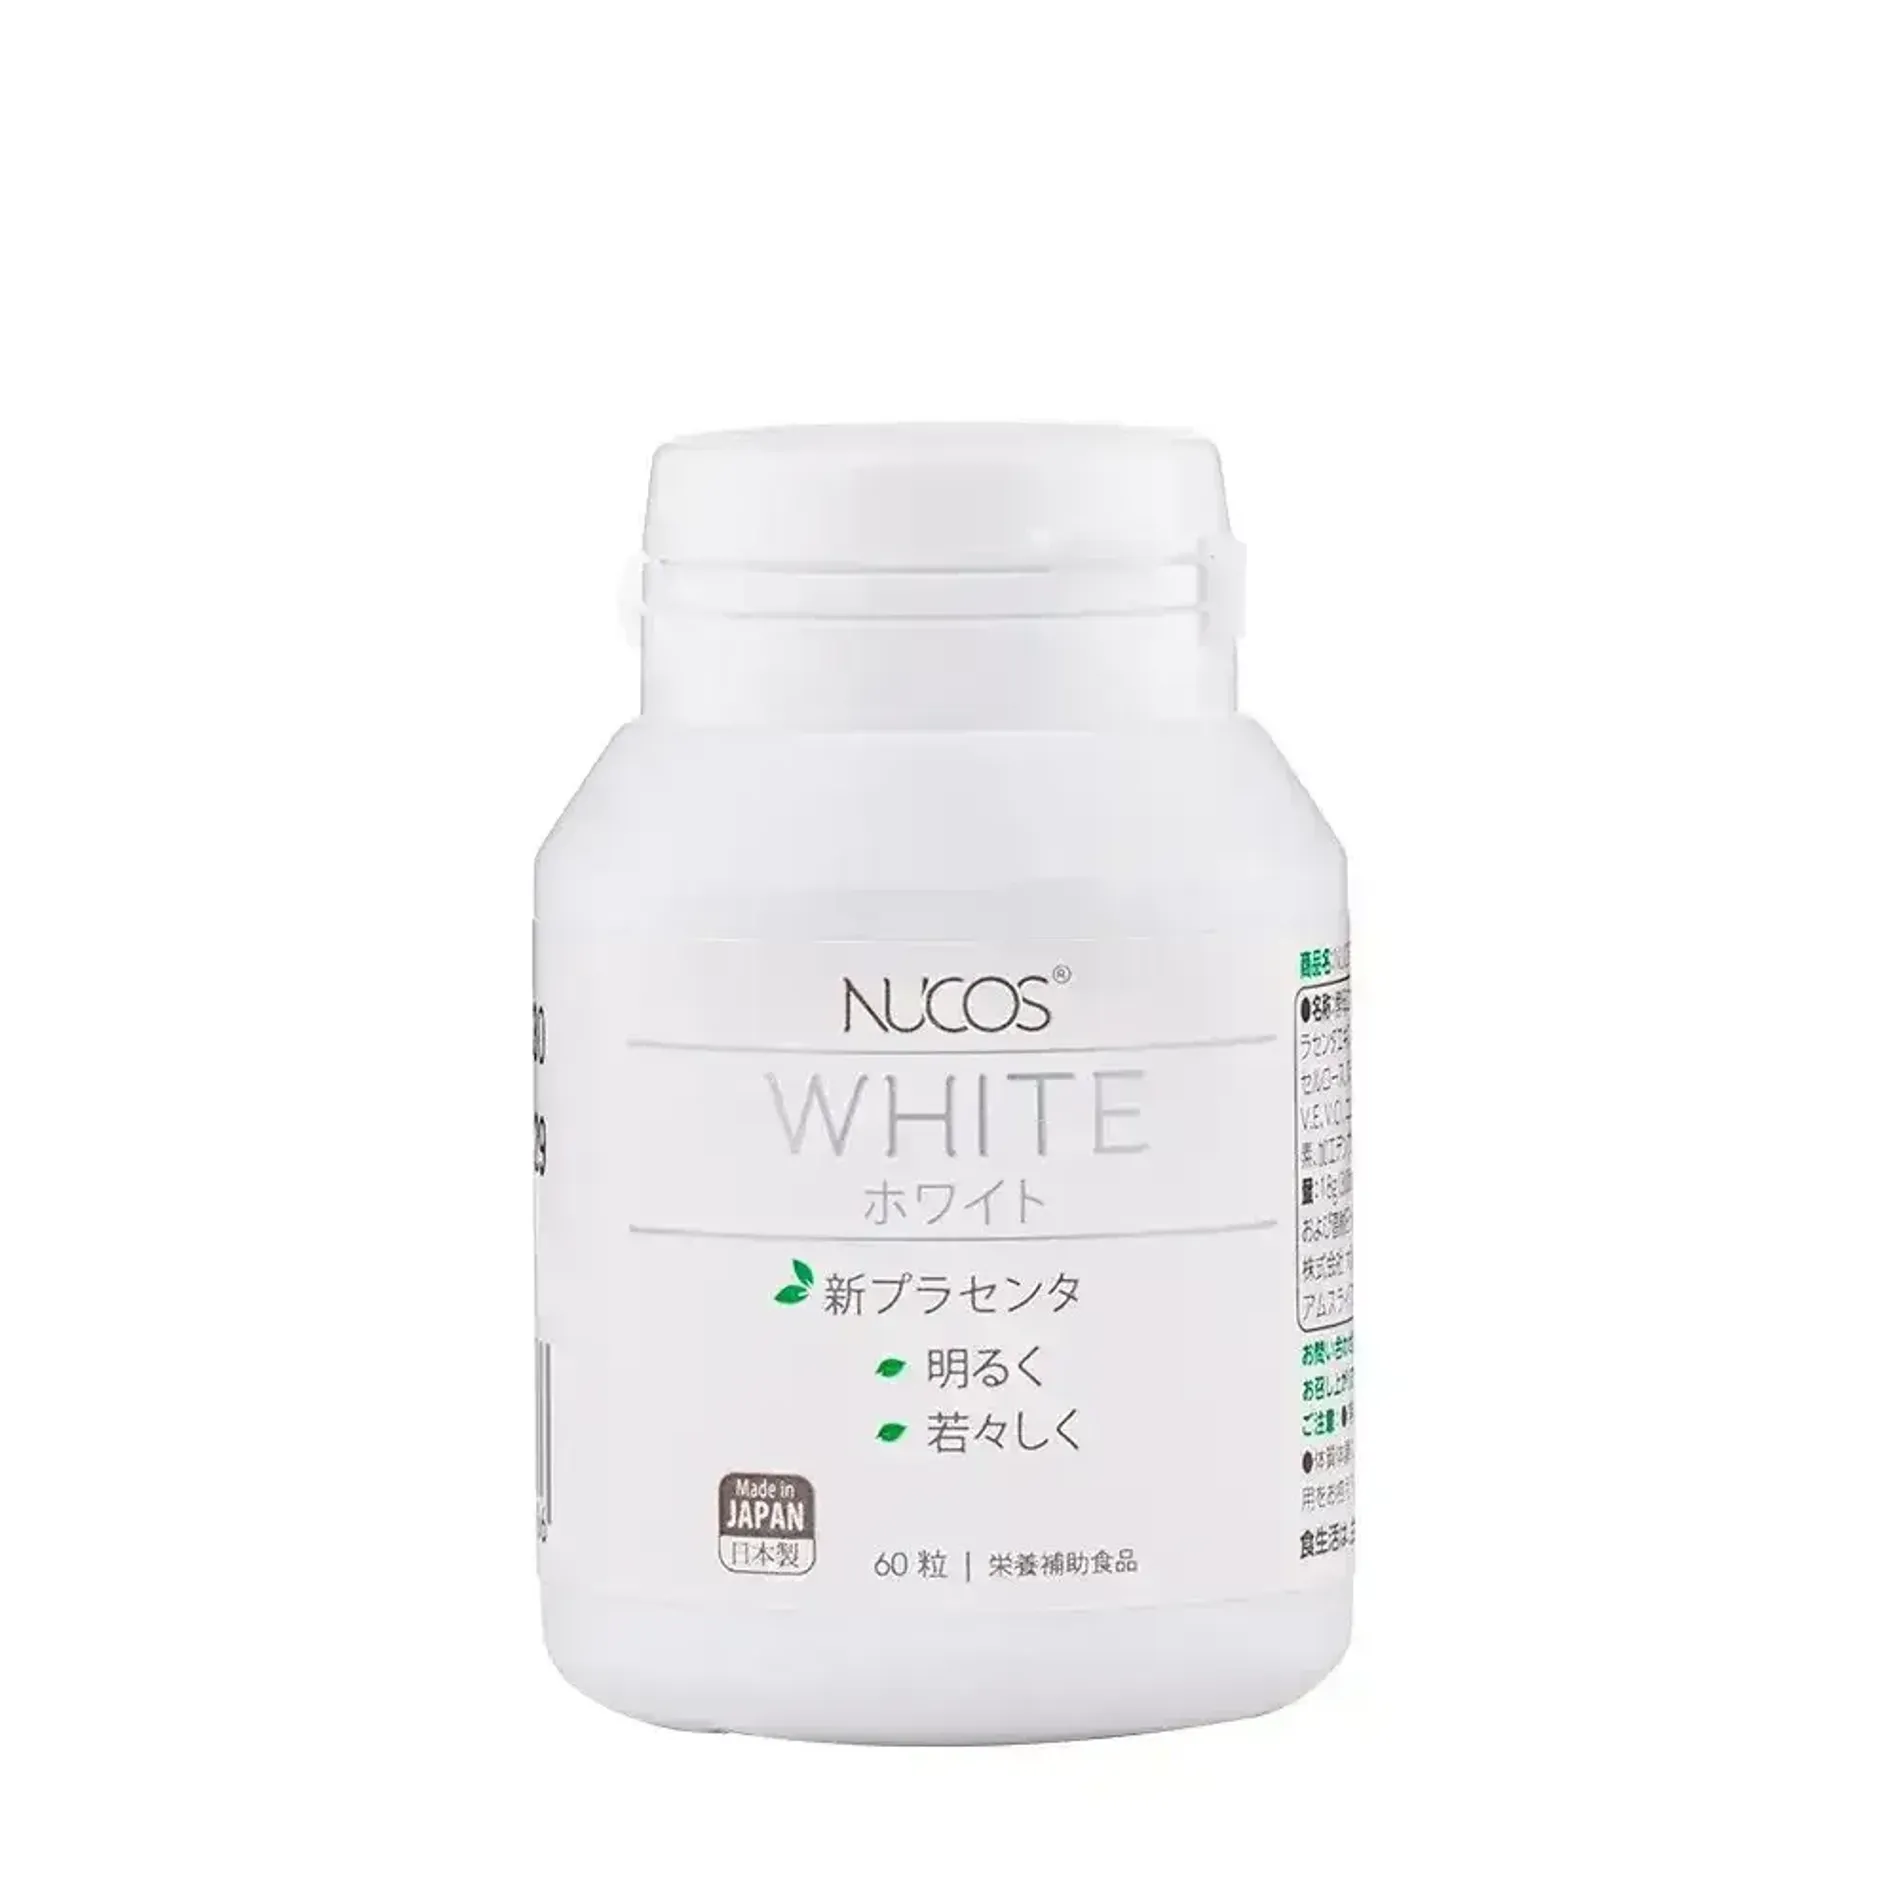 vien-uong-trang-da-nucos-white-for-whitening-reduce-melasma-60-vien-1